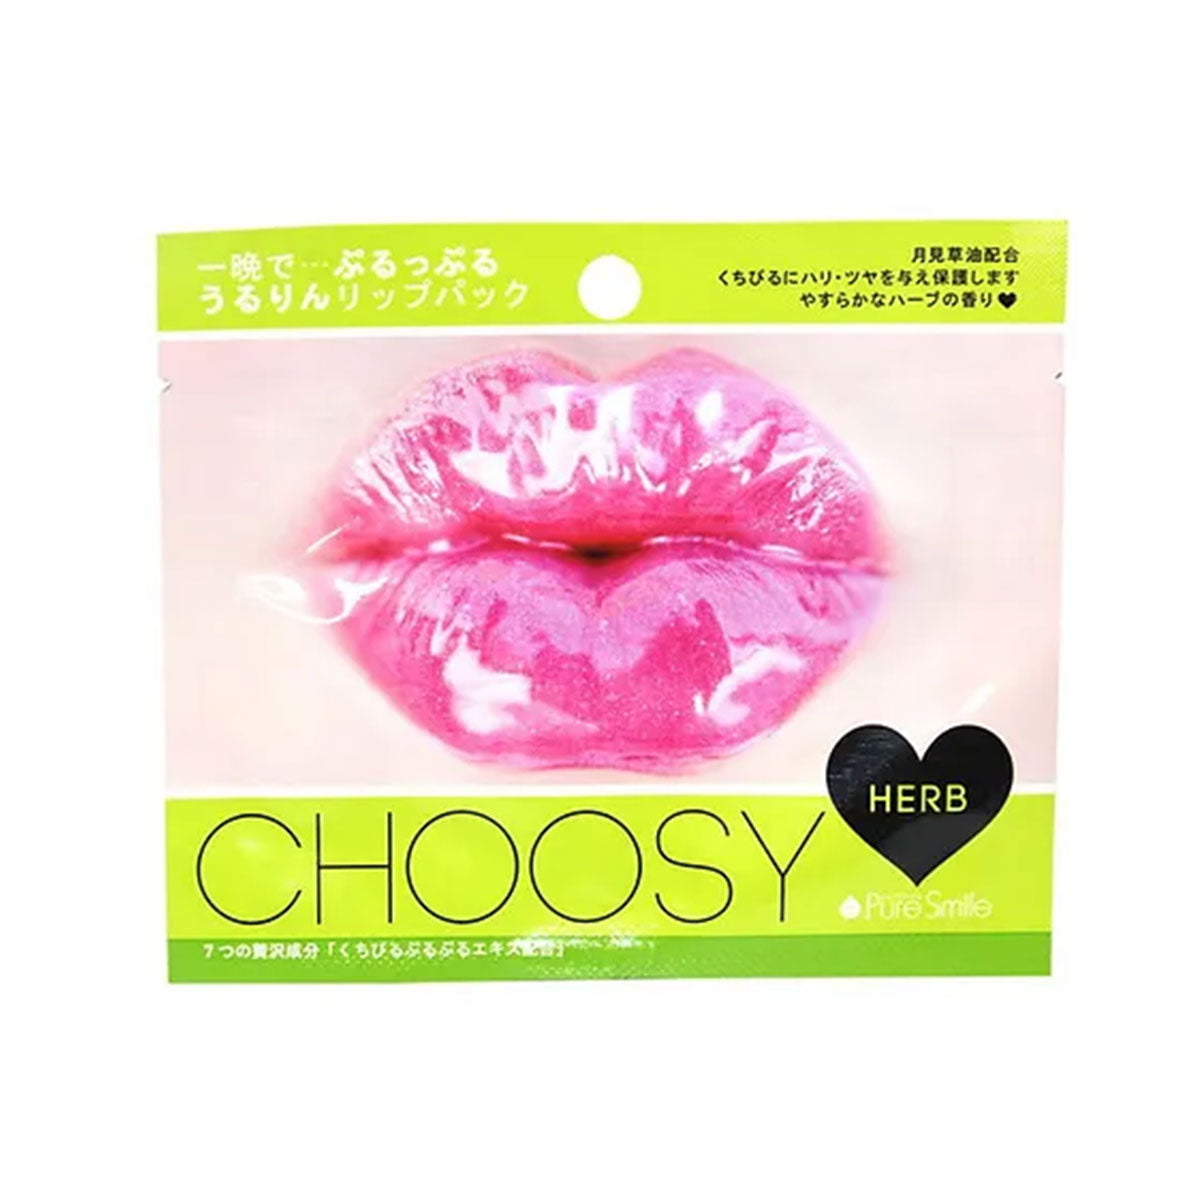 Pure Smile Choosy Lip Mask Herb 1pcs